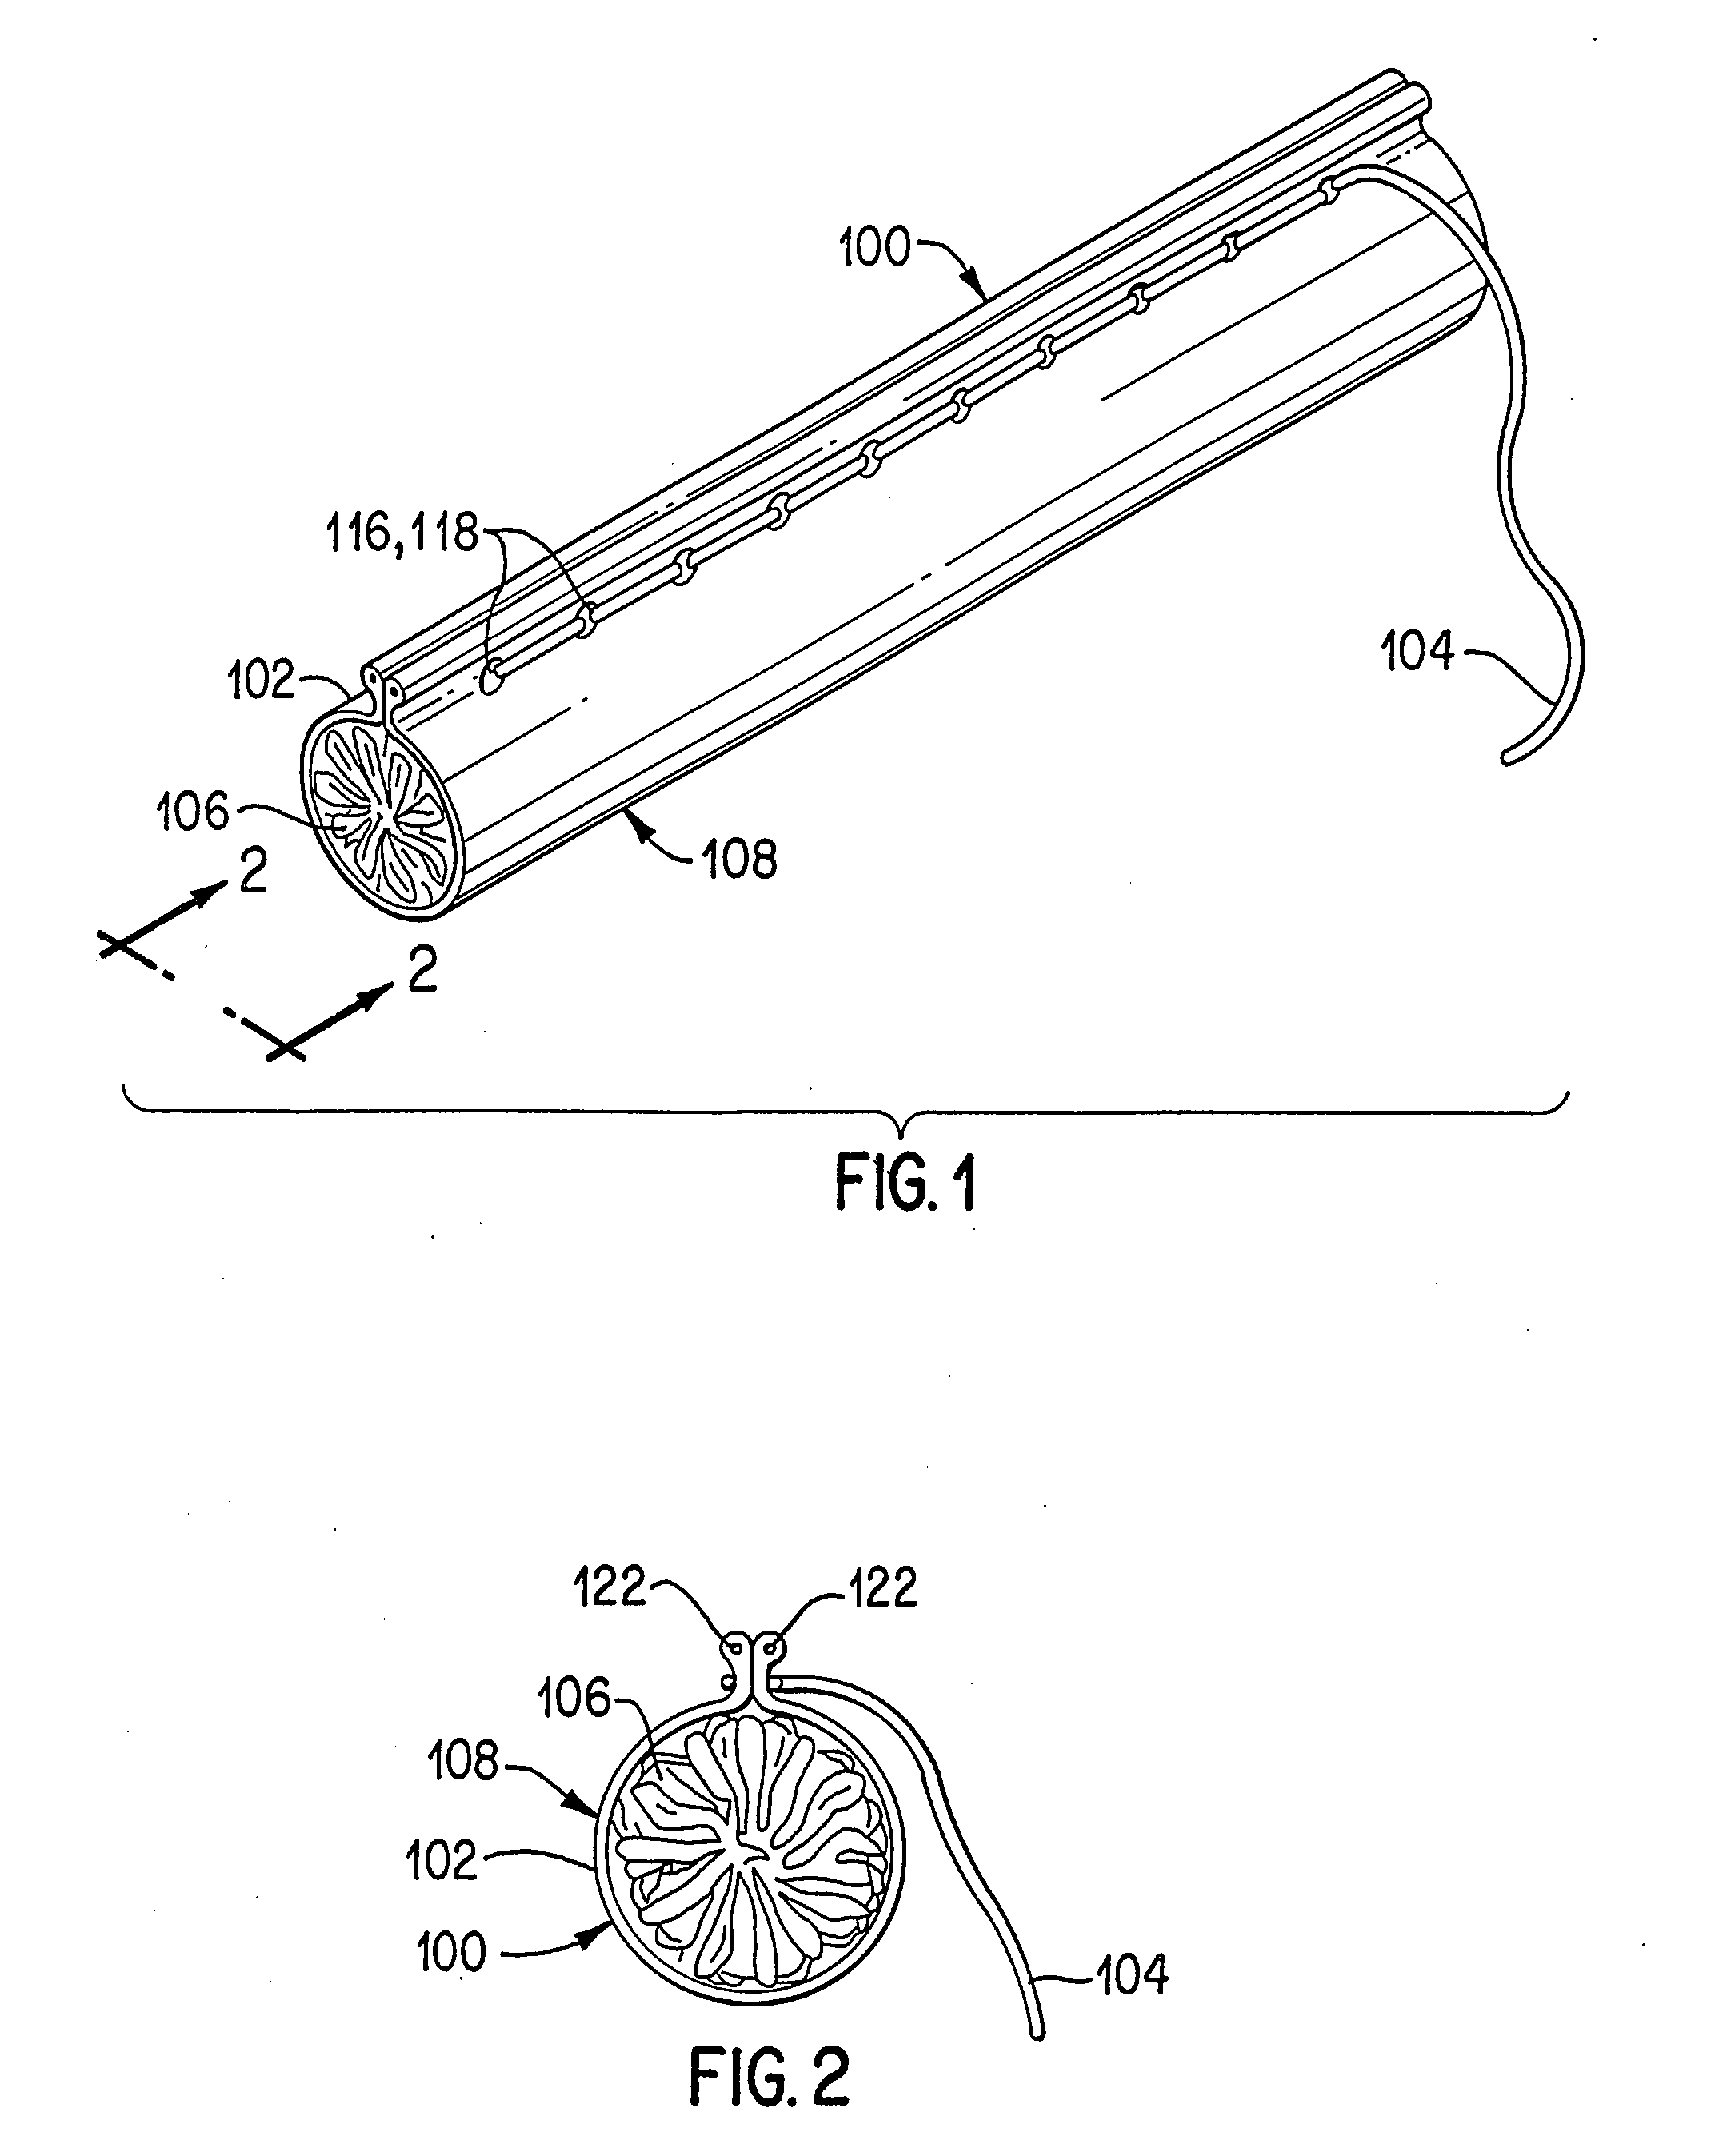 Implant deployment apparatus